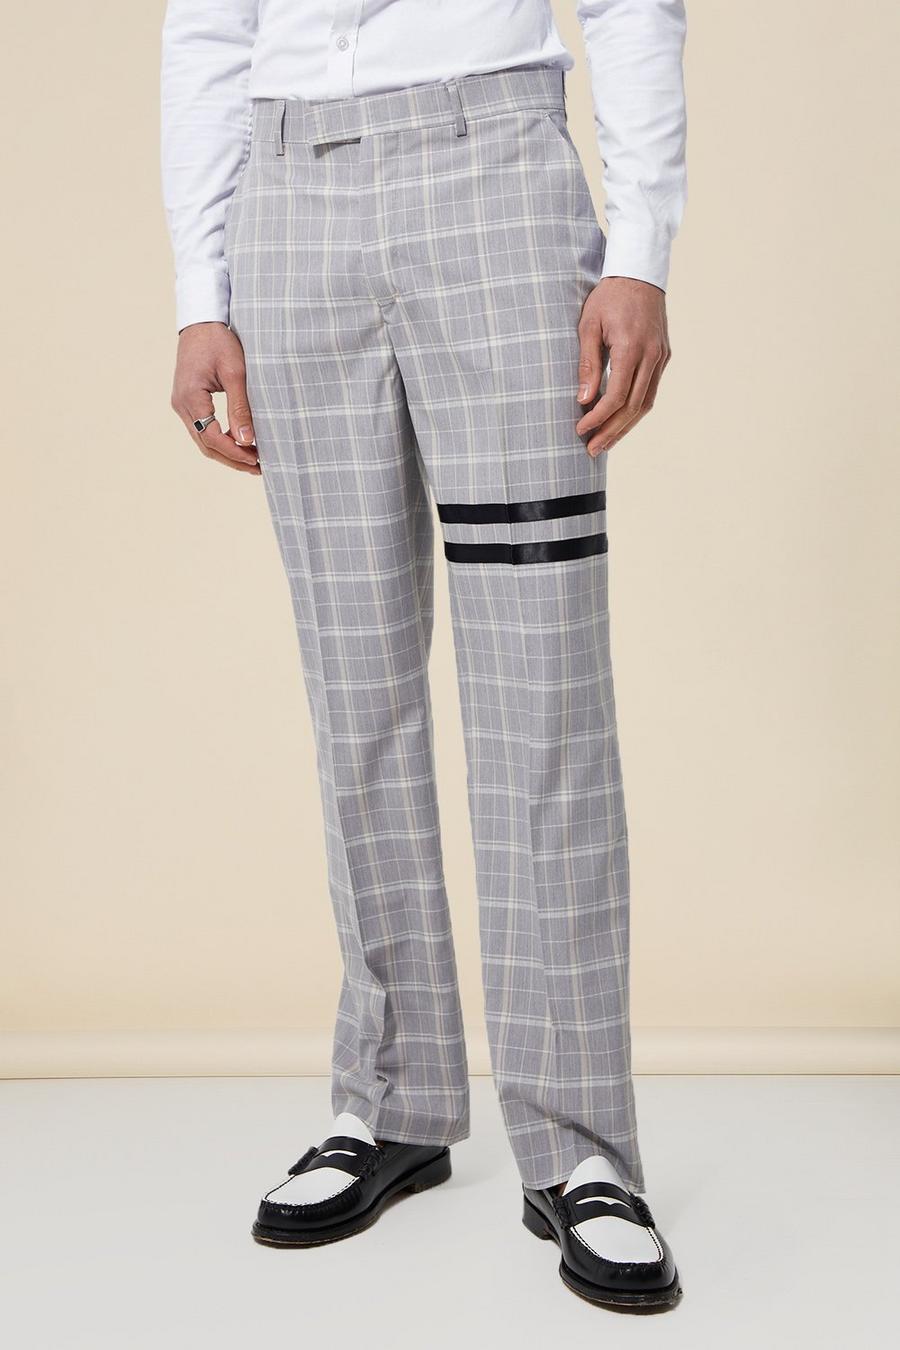 Grey grigio מכנסי חליפה עם הדפס משבצות בגזרה משוחררת